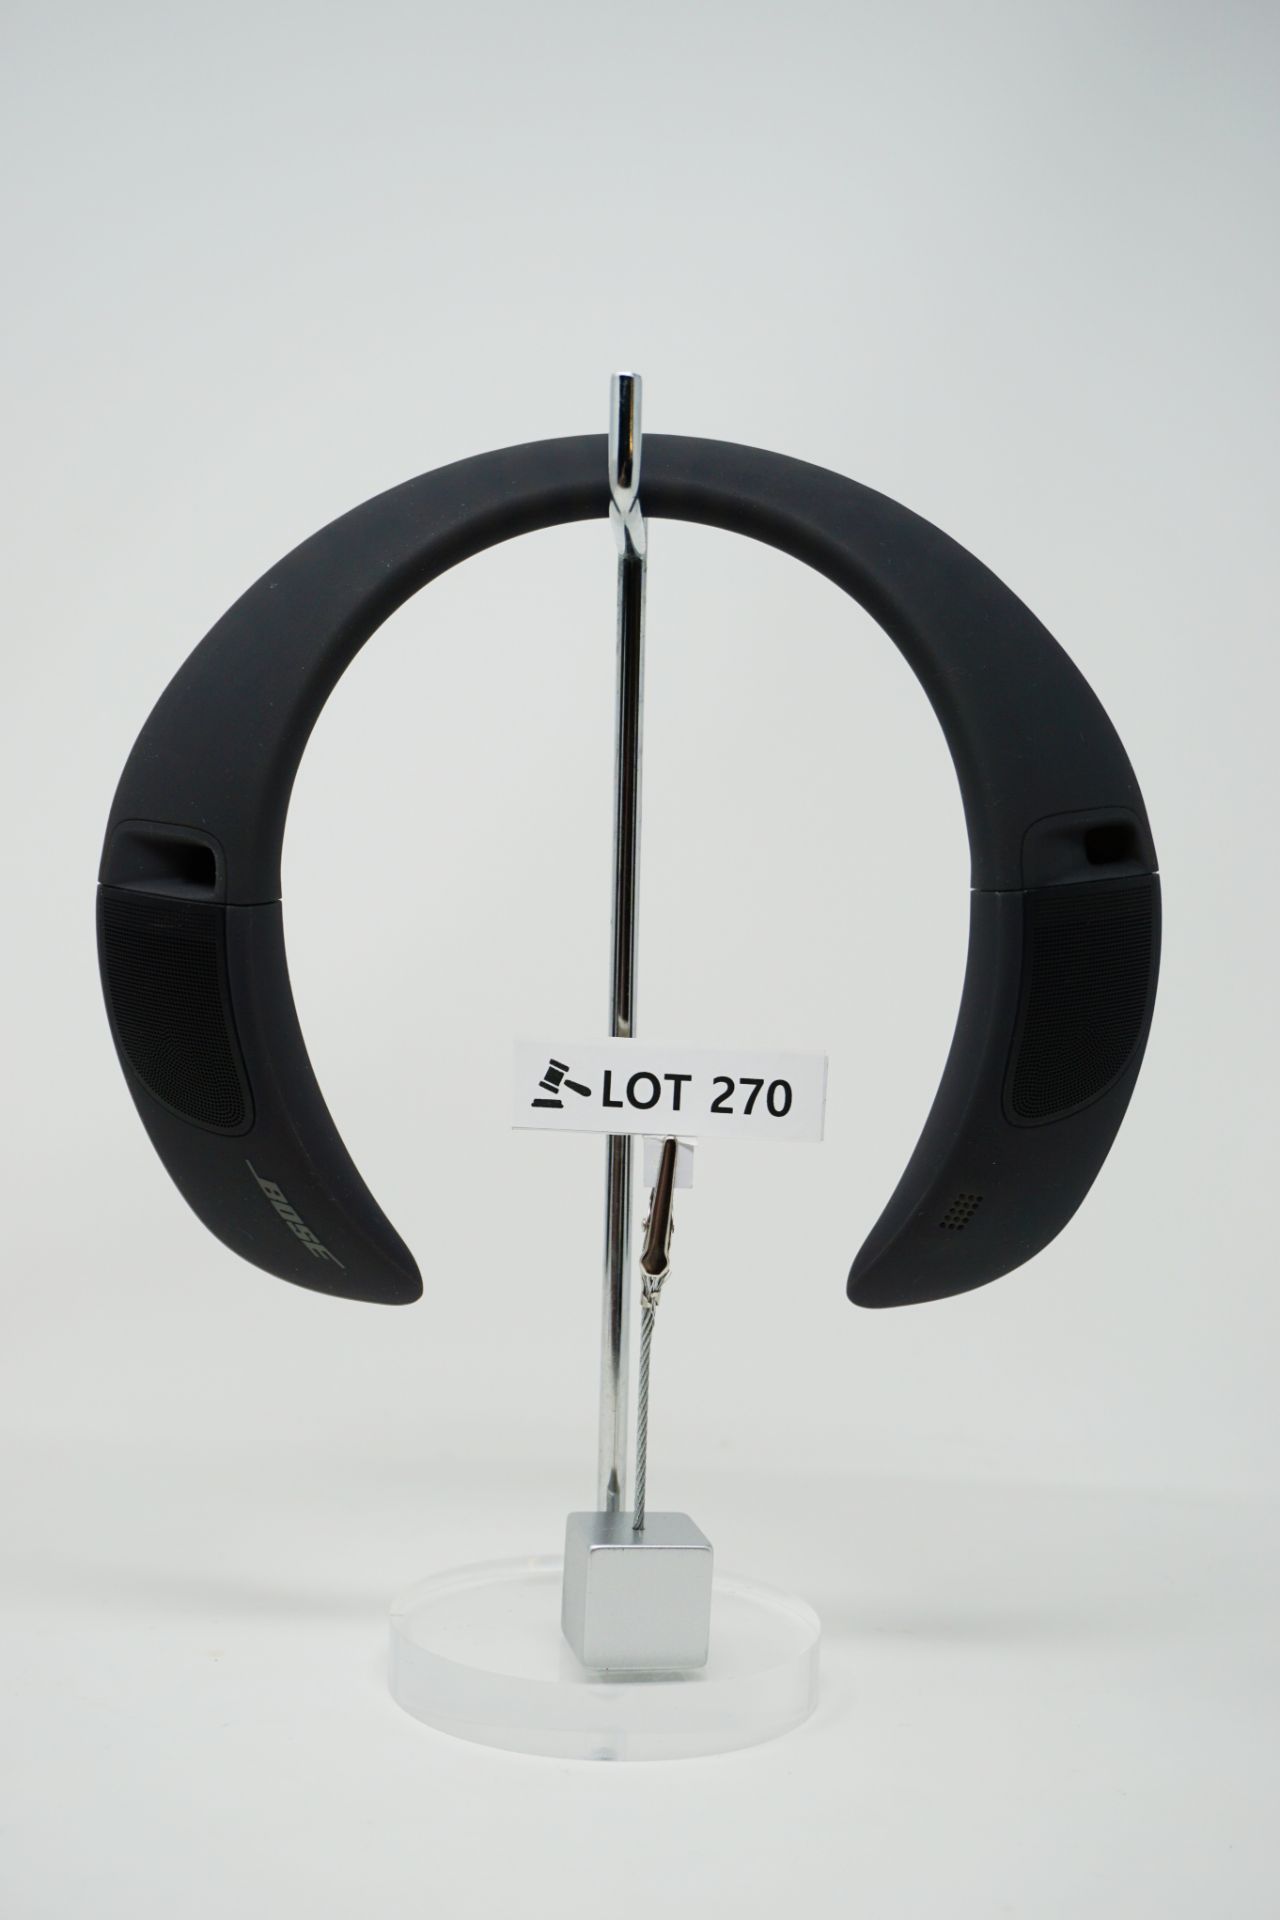 RRP £259.99 Bose SoundWear Companion Speaker - Black - Image 2 of 2